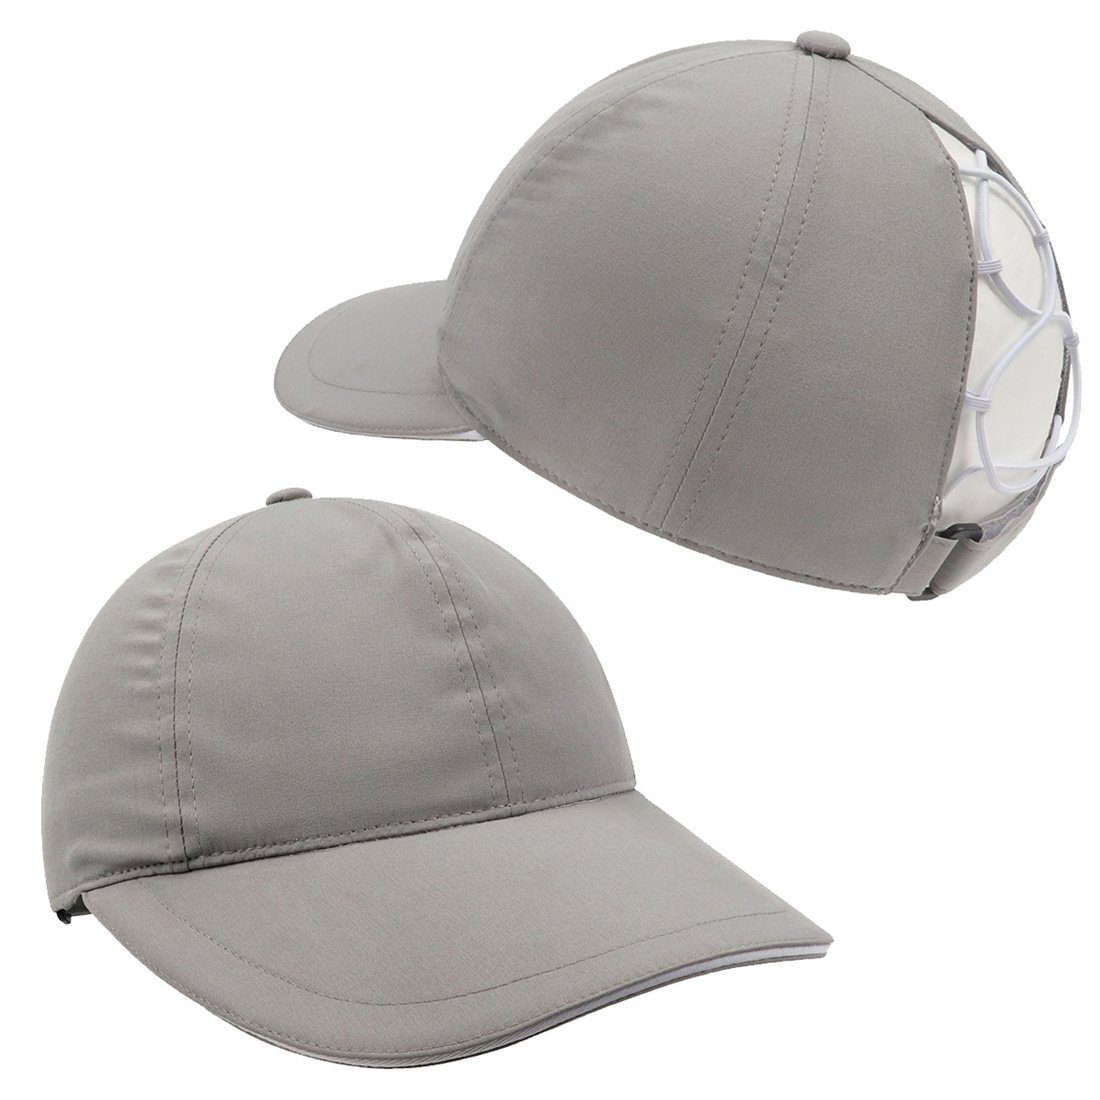 DÖRÖY Baseball Cap Outdoor-Baseballkappe für Frauen,schnell trocknende Kappe,Sonnenblende Grau | Baseball Caps